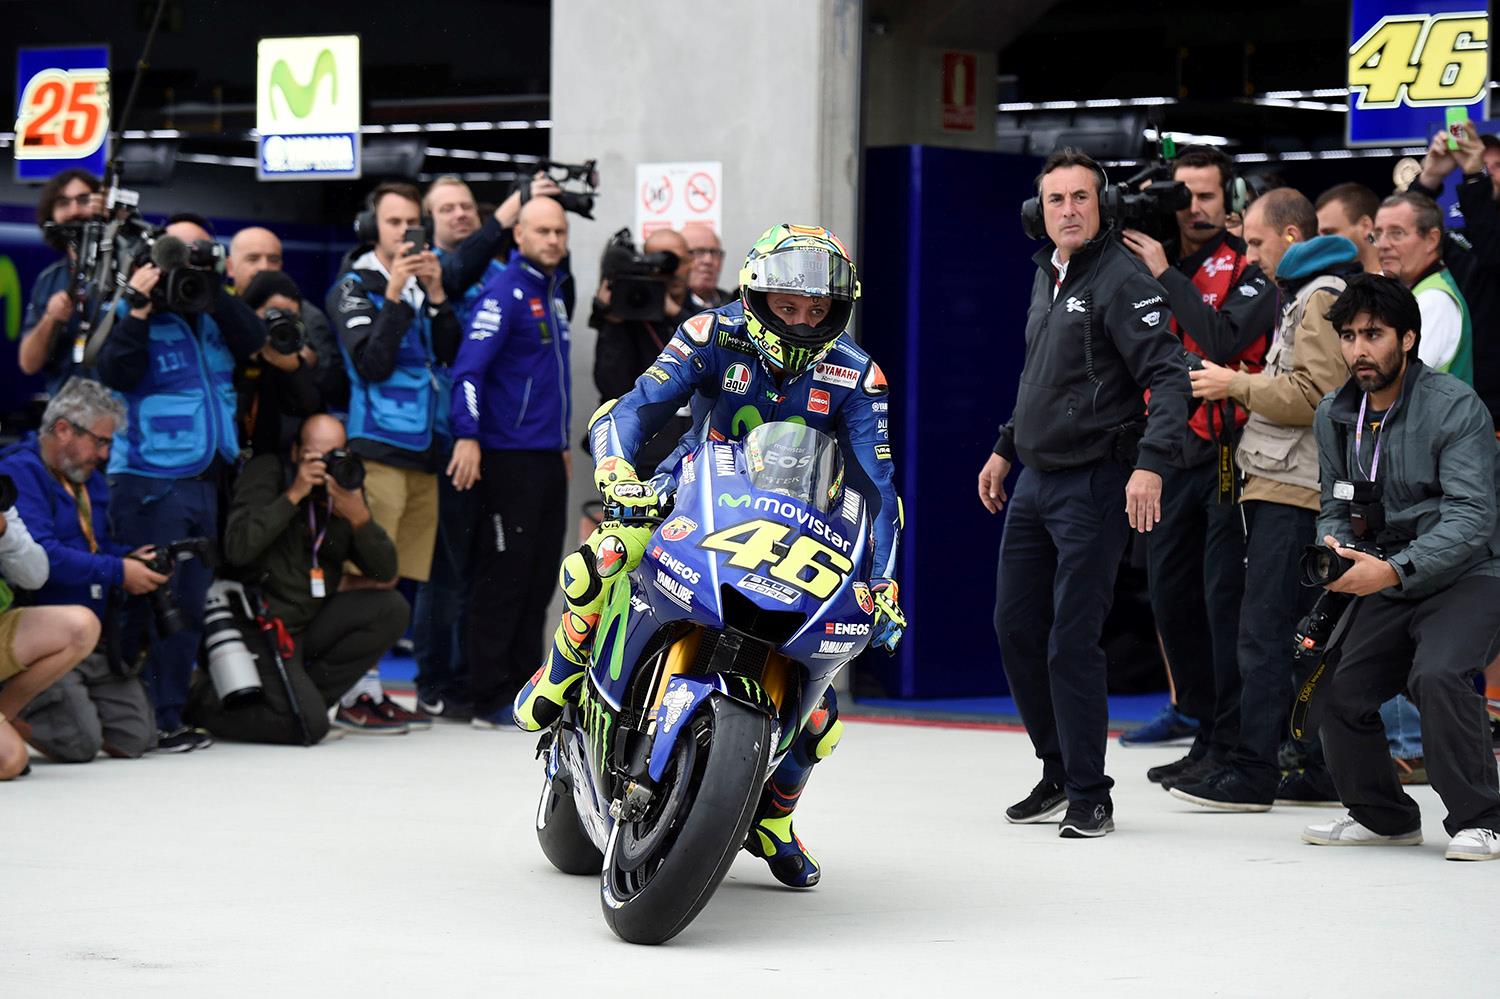 MotoGP: Rossi feeling comfortable as he returns to action | MCN